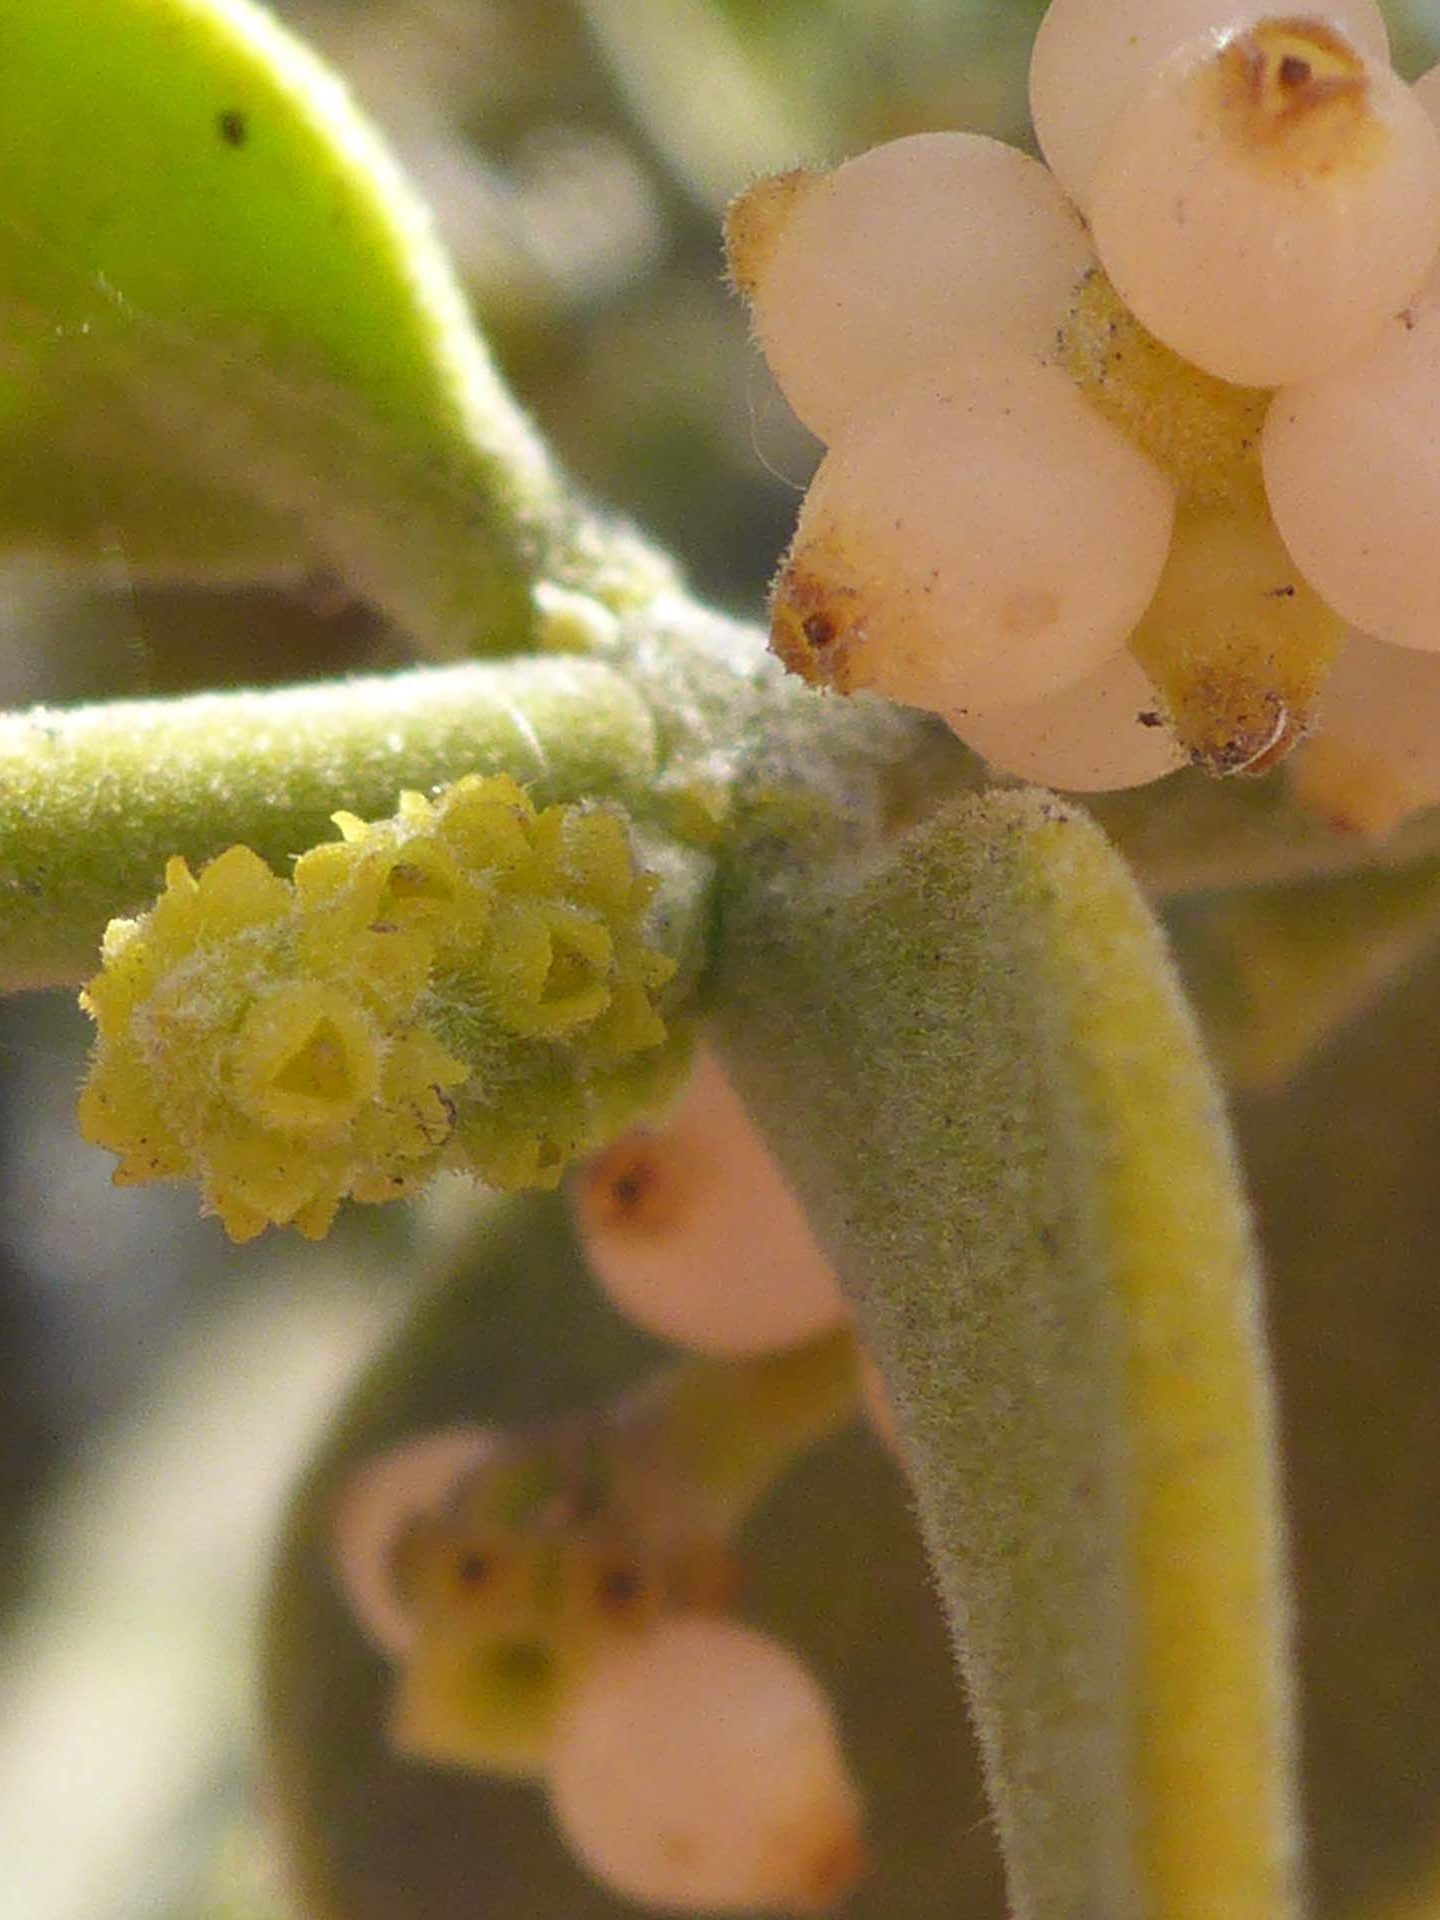 Hairy mistletoe flowers and fruits. D. Burk.